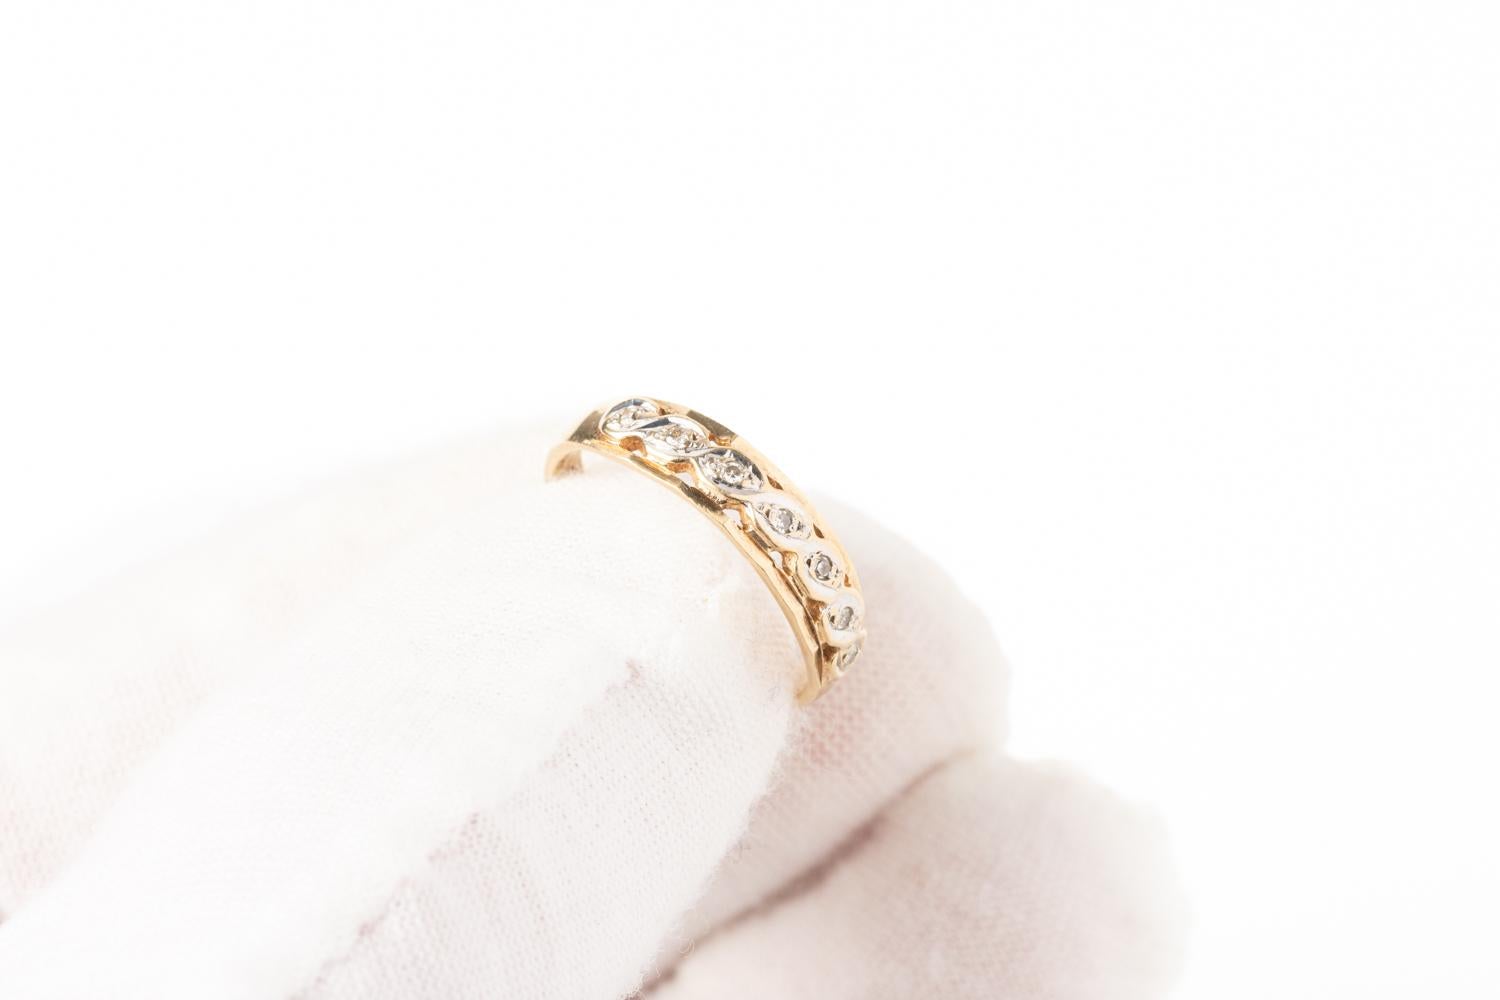 Women's Vintage Art Deco Style 9 Carat Diamond and Platinium Ring For Sale